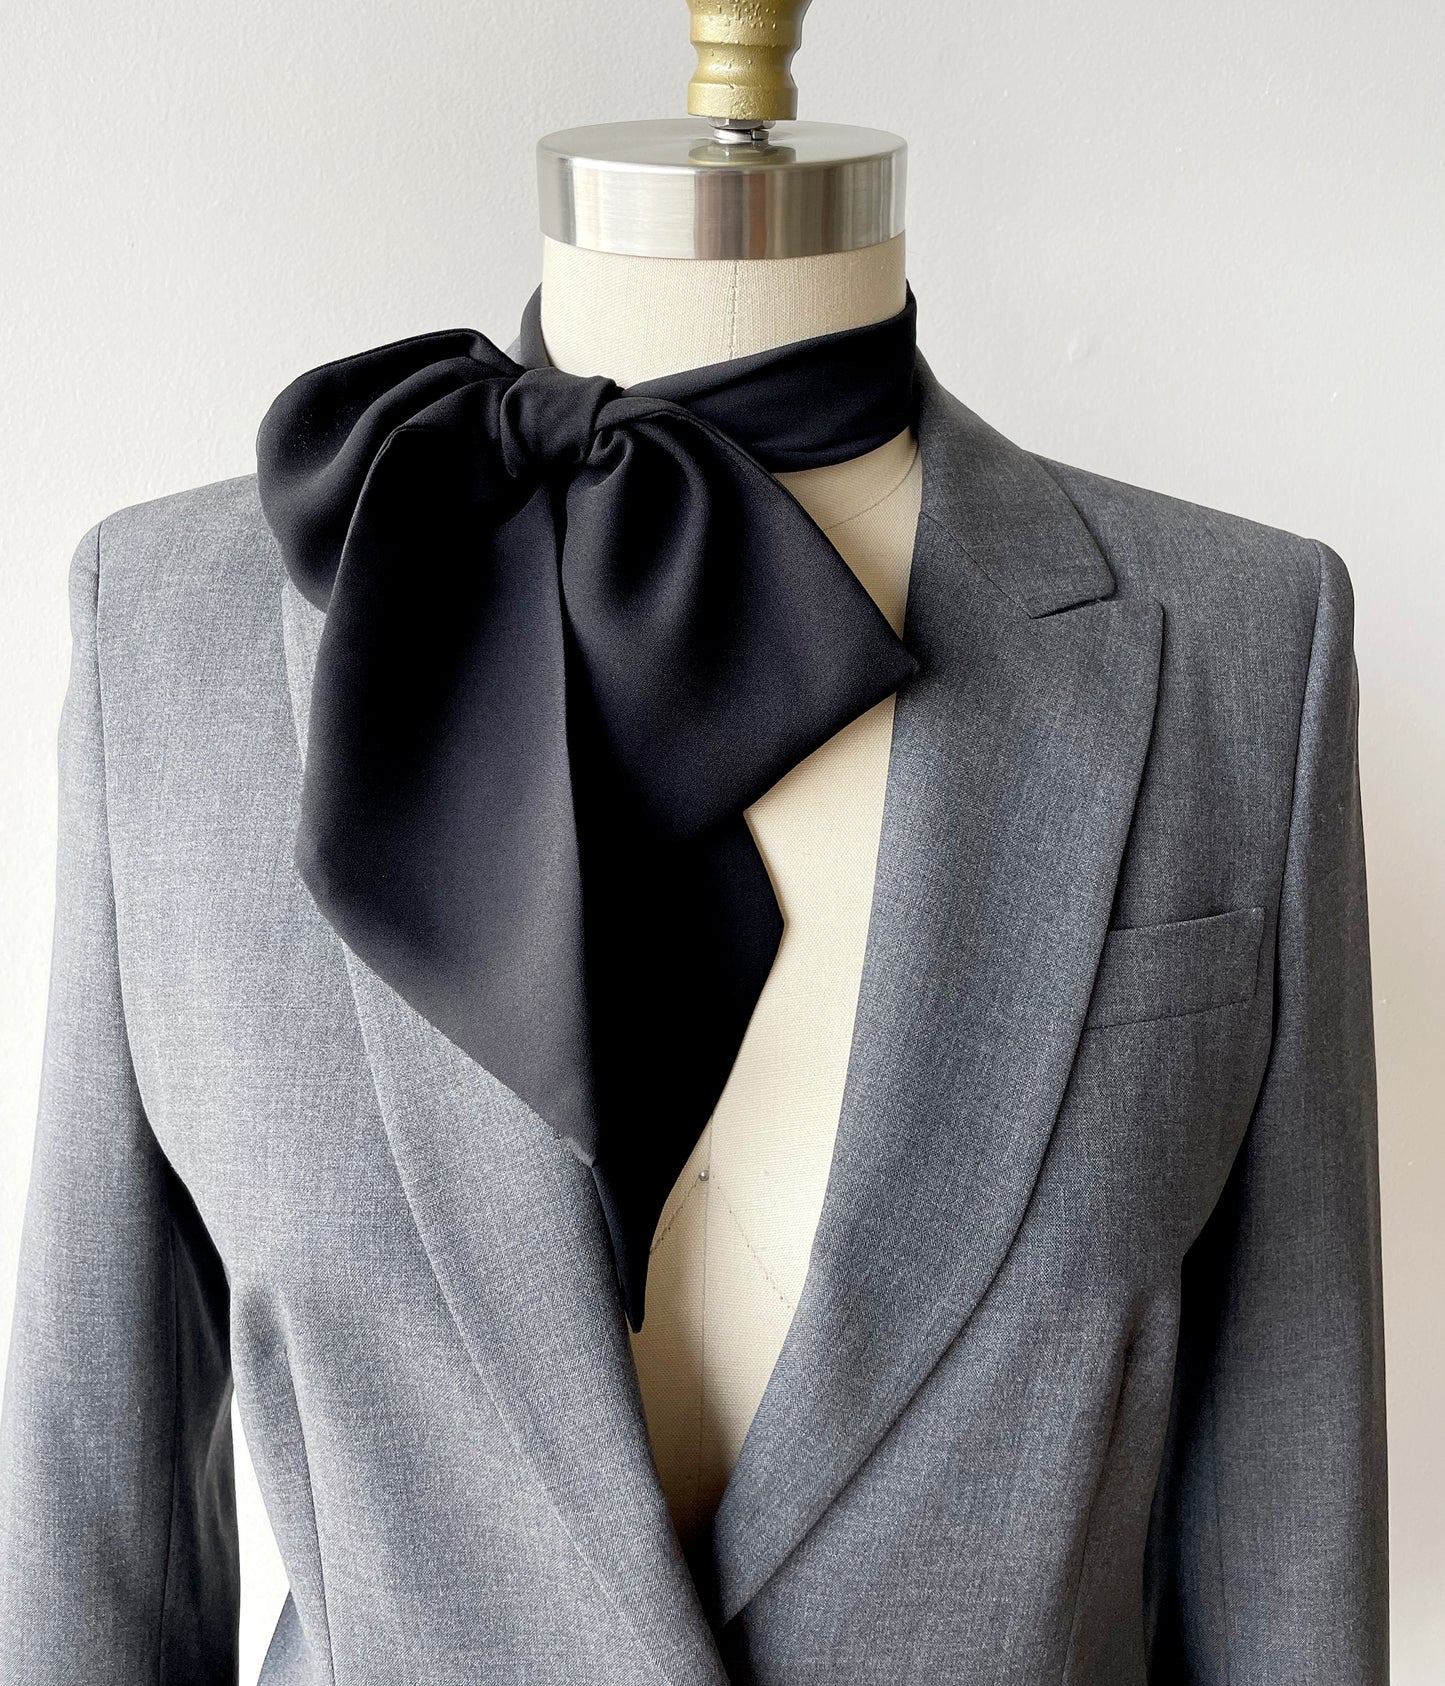 A men's scarf, i.e. a long silk scarf, is a versatile accessory